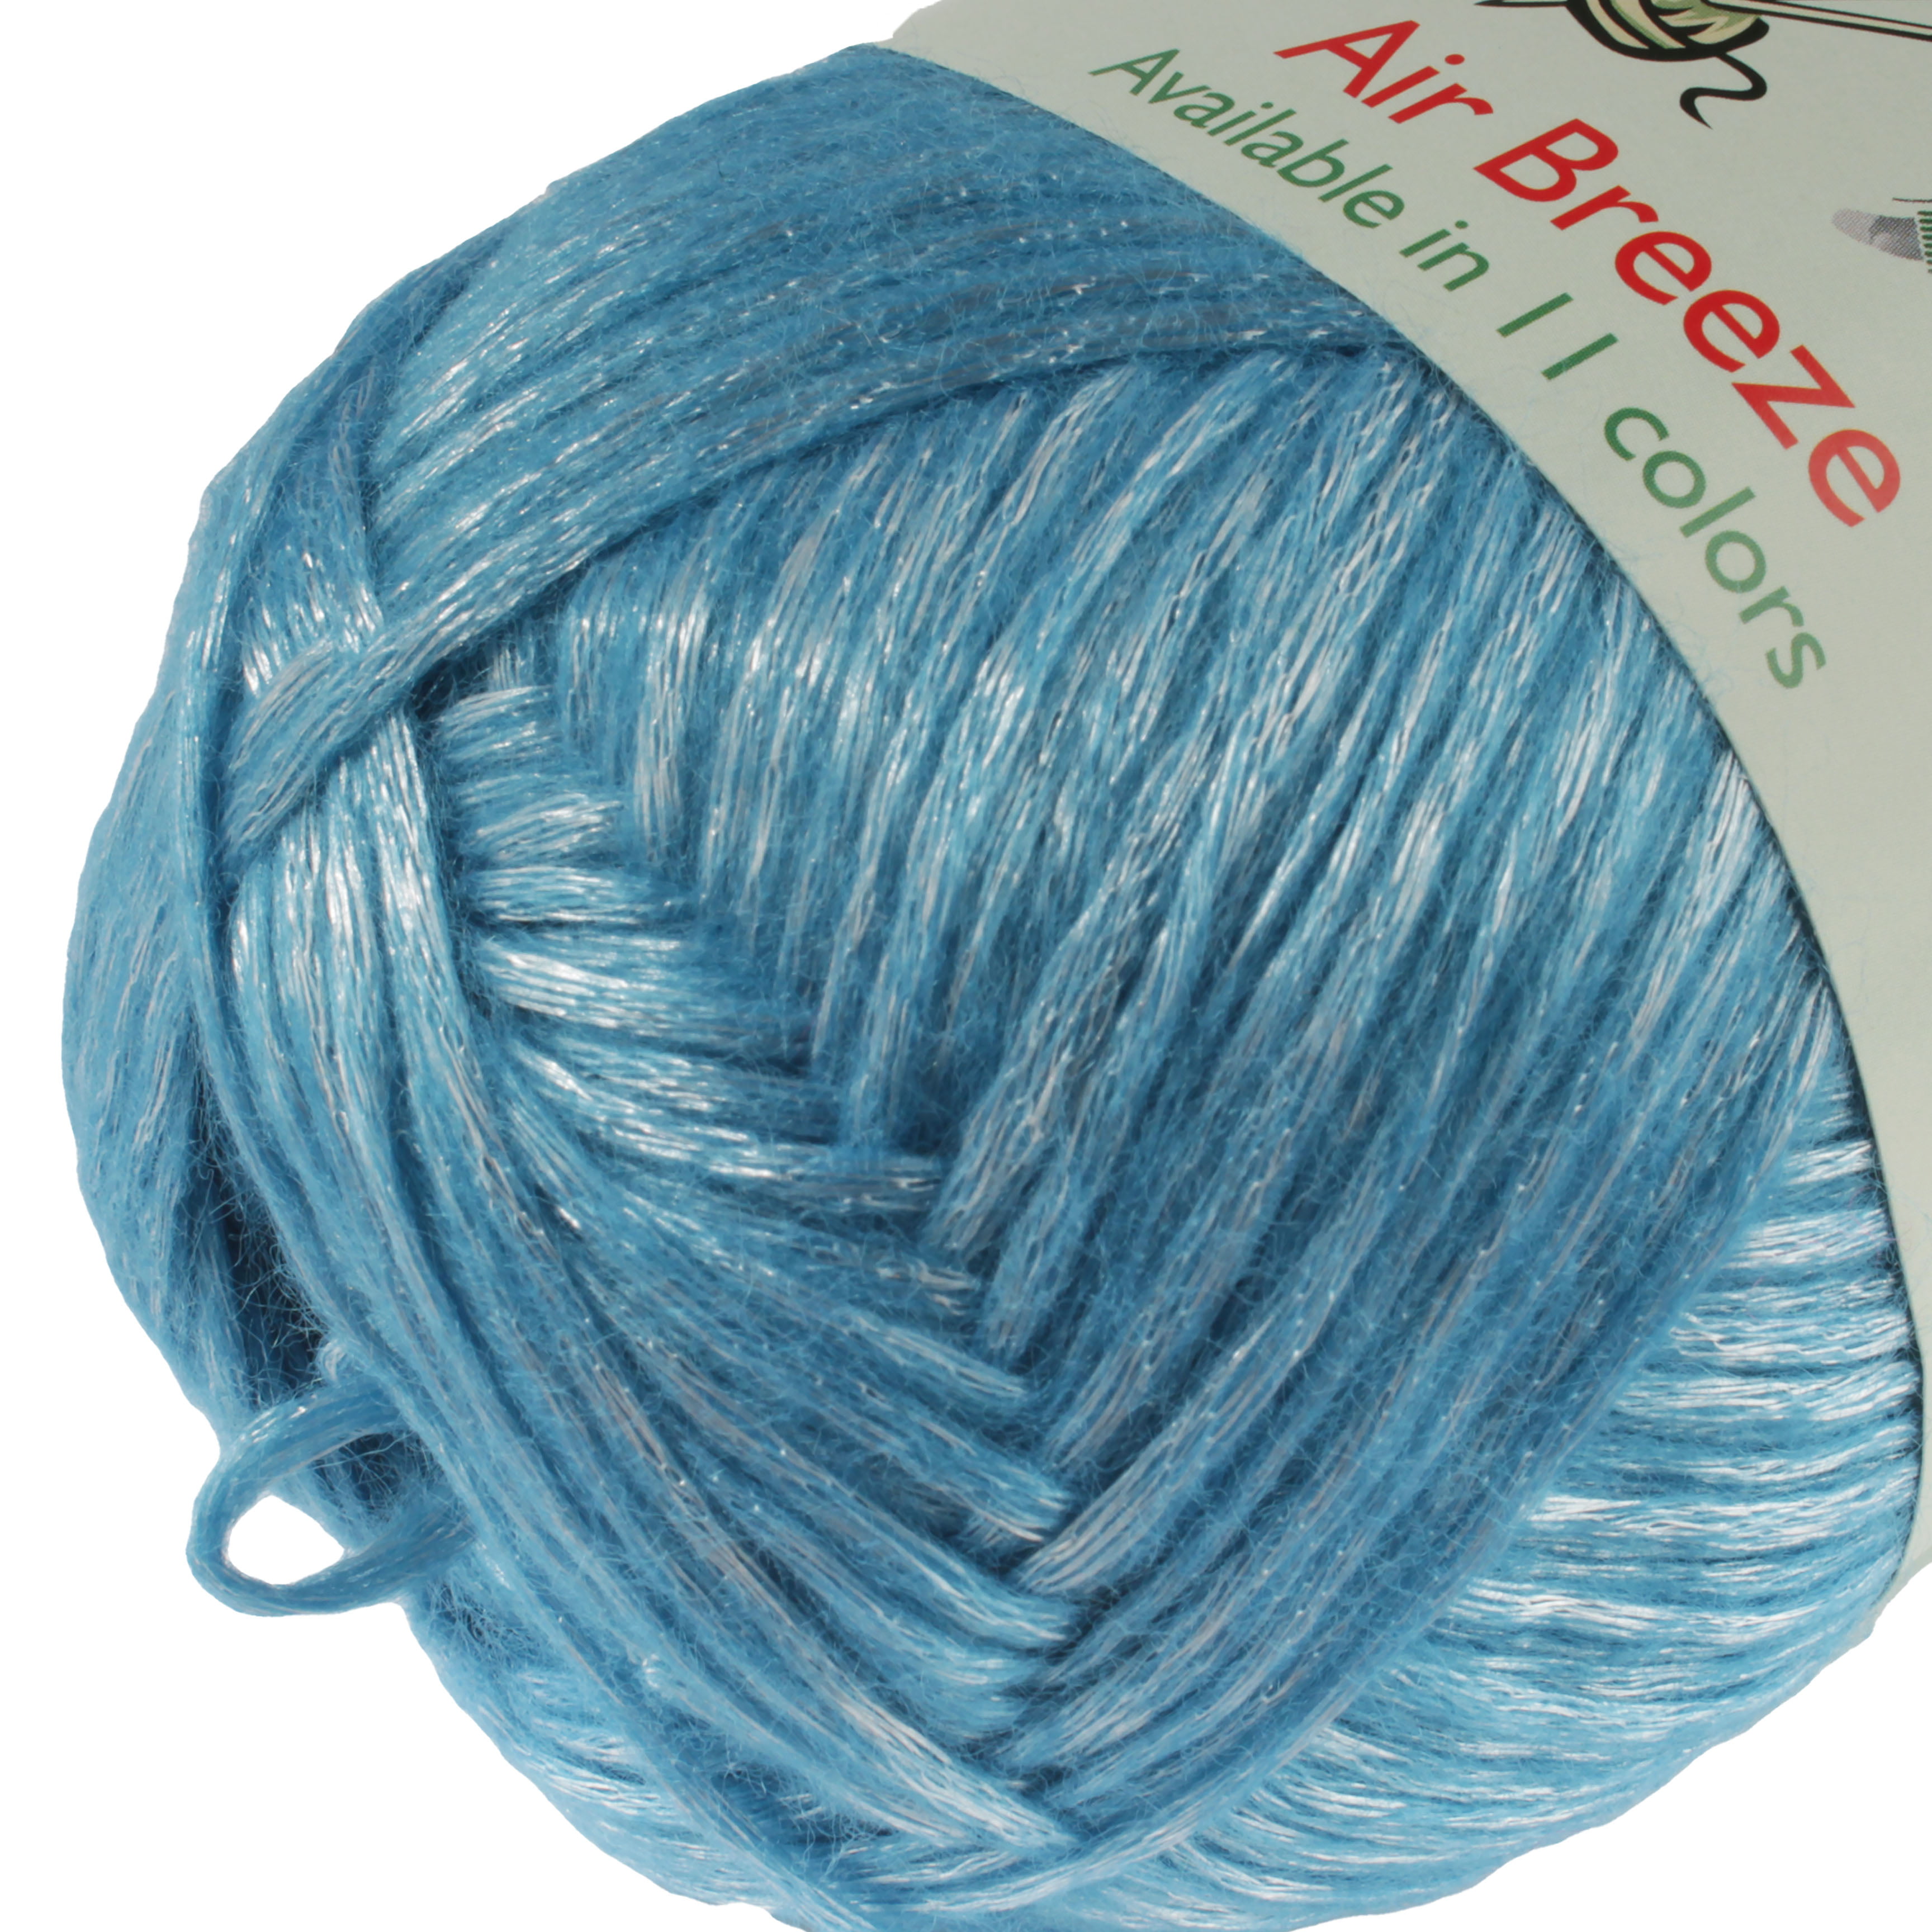 JubileeYarn Air Breeze Yarn - Fine Weight Acrylic - 50g/Skein - Cobalt Blue - 4 Skeins